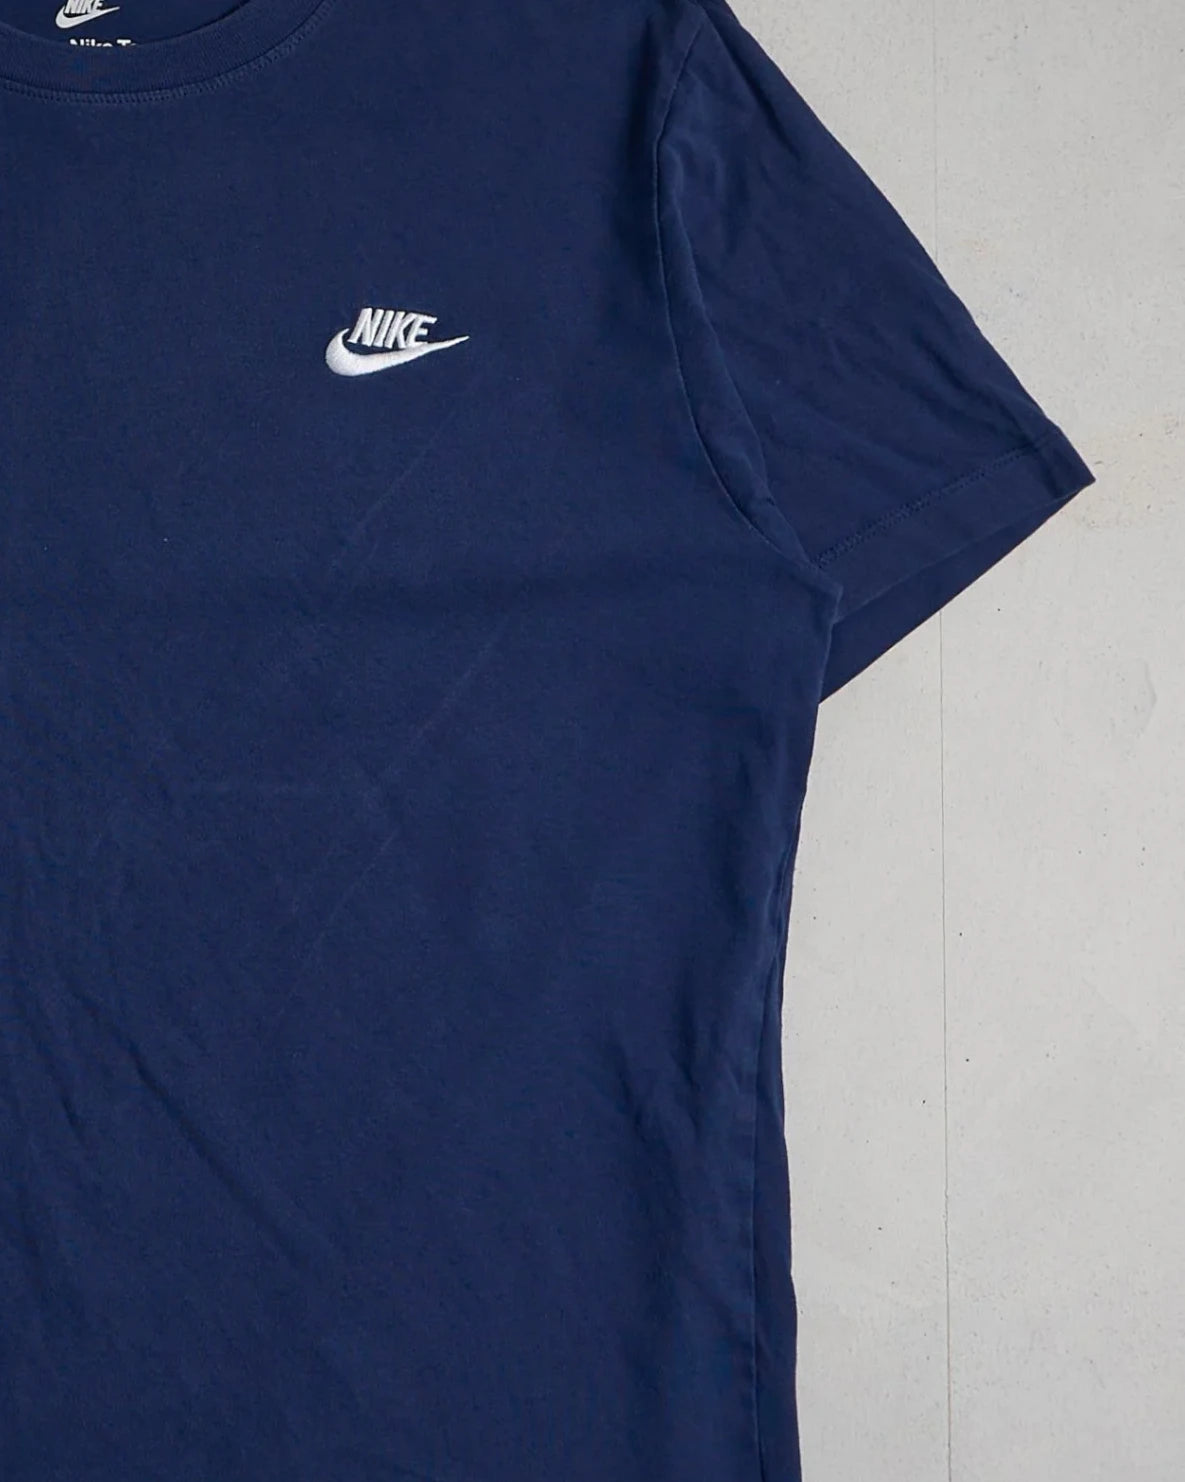 Vintage Nike T-shirt Right